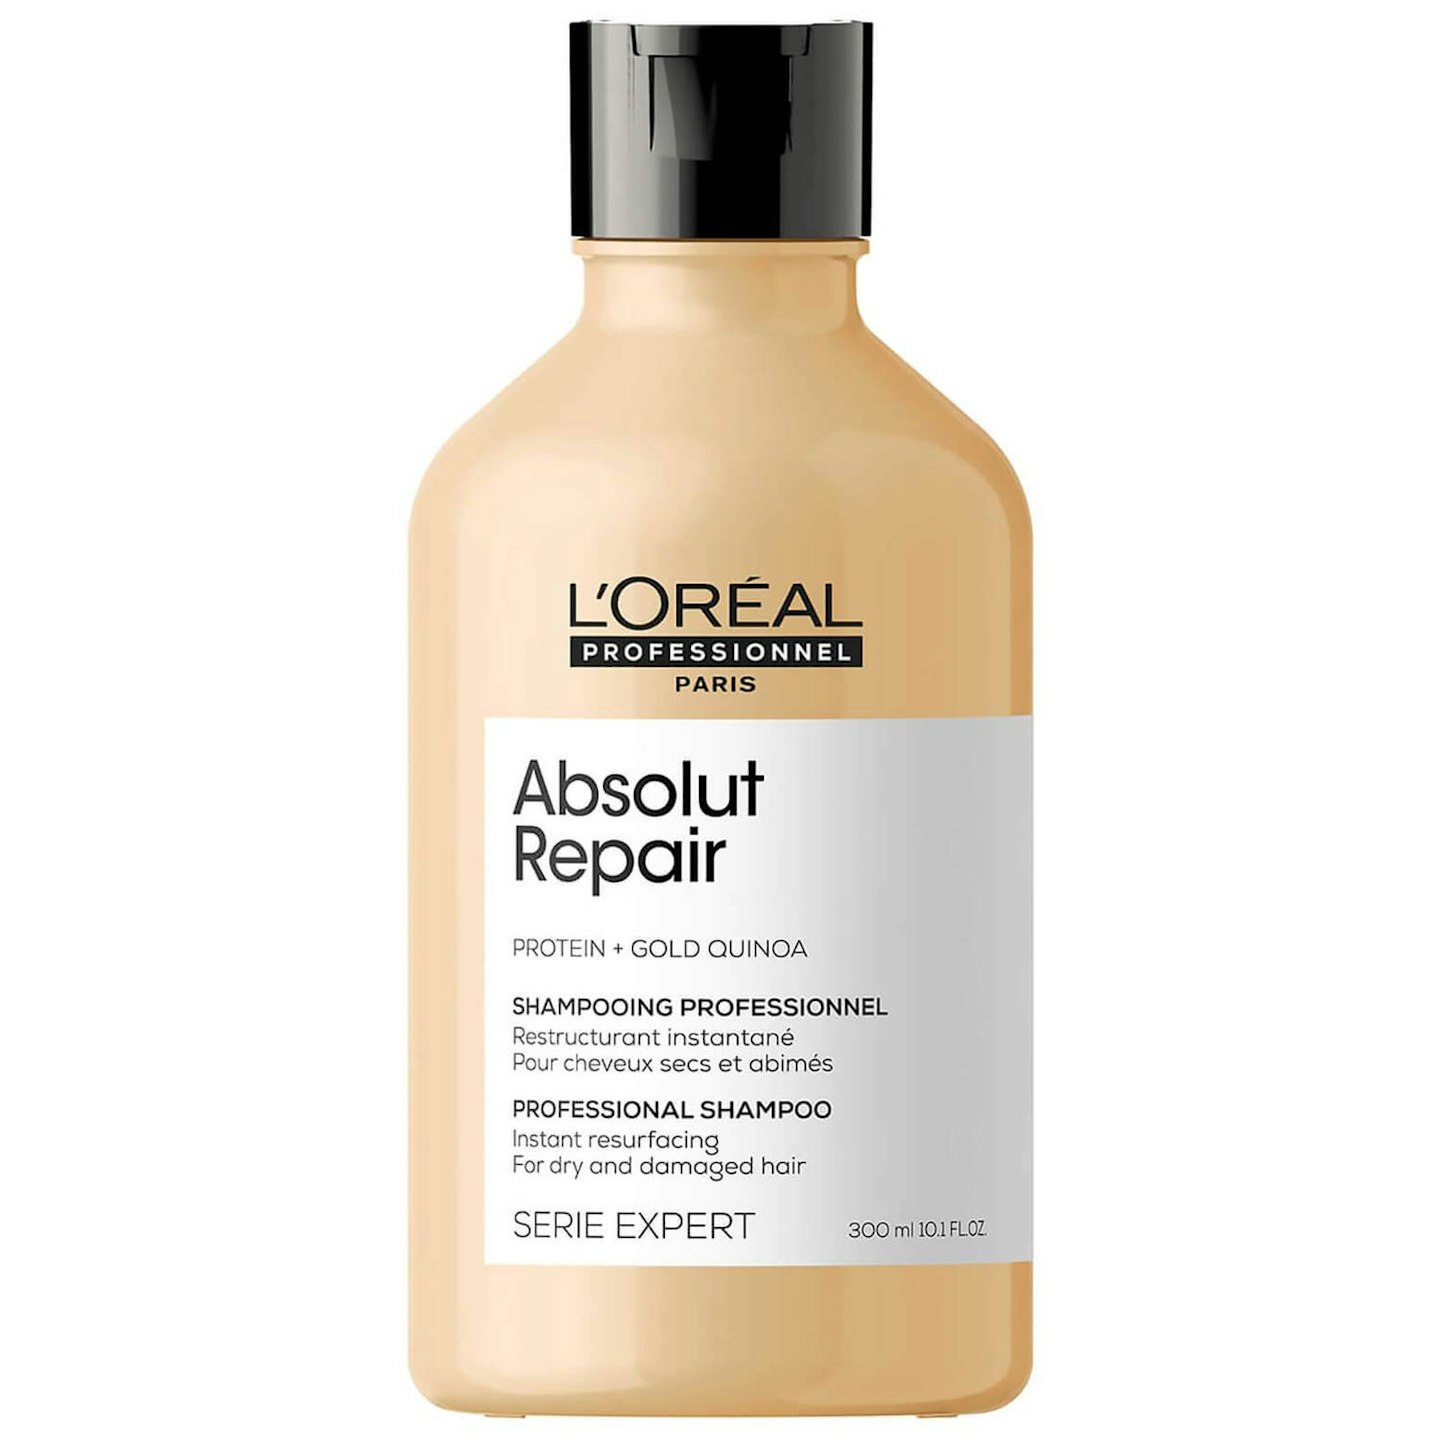 L'Oréal Paris shampoo for damaged hair